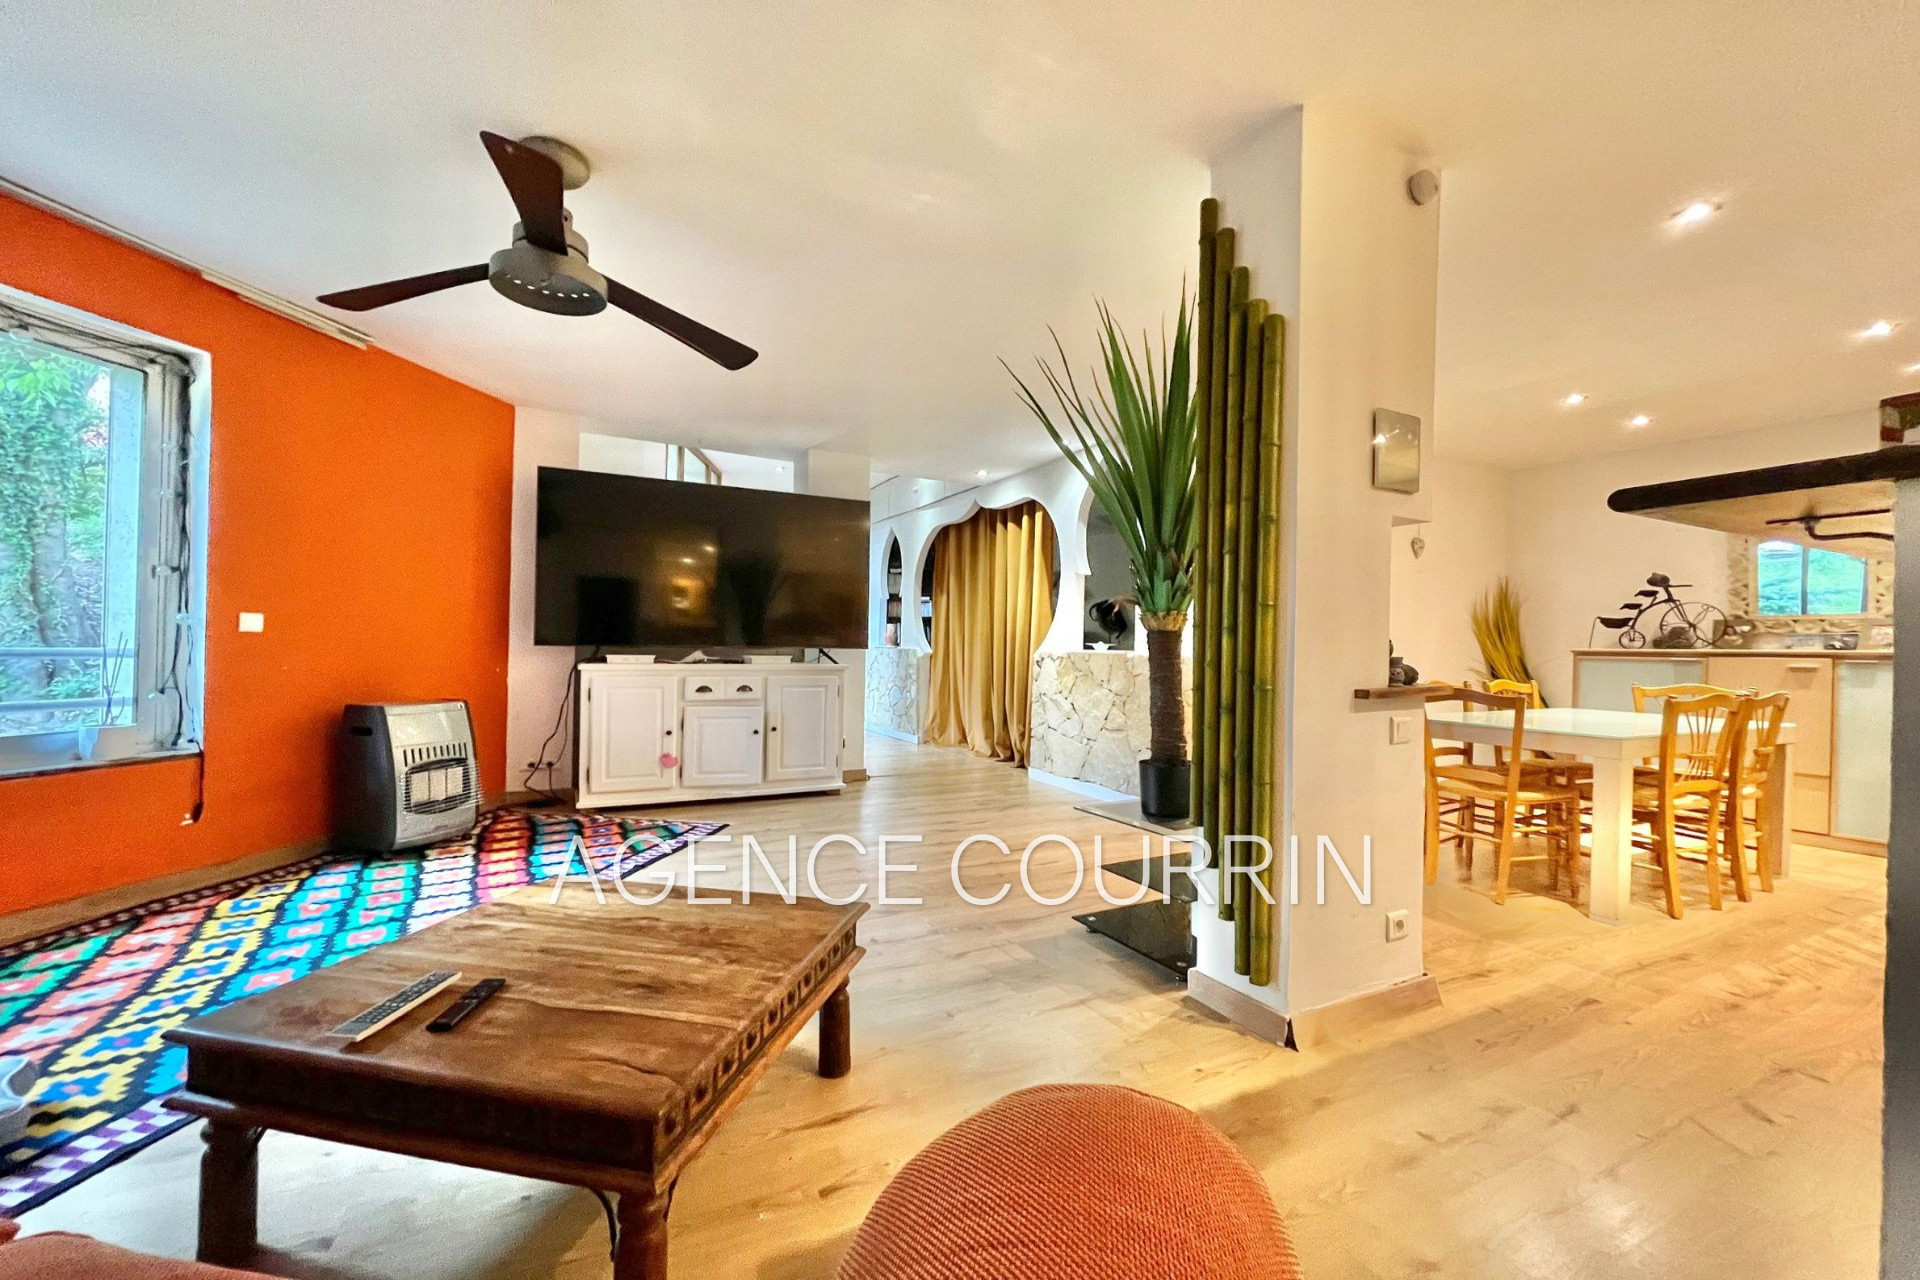 Vente Appartement 127m² à Grasse (06130) - Agence Courrin